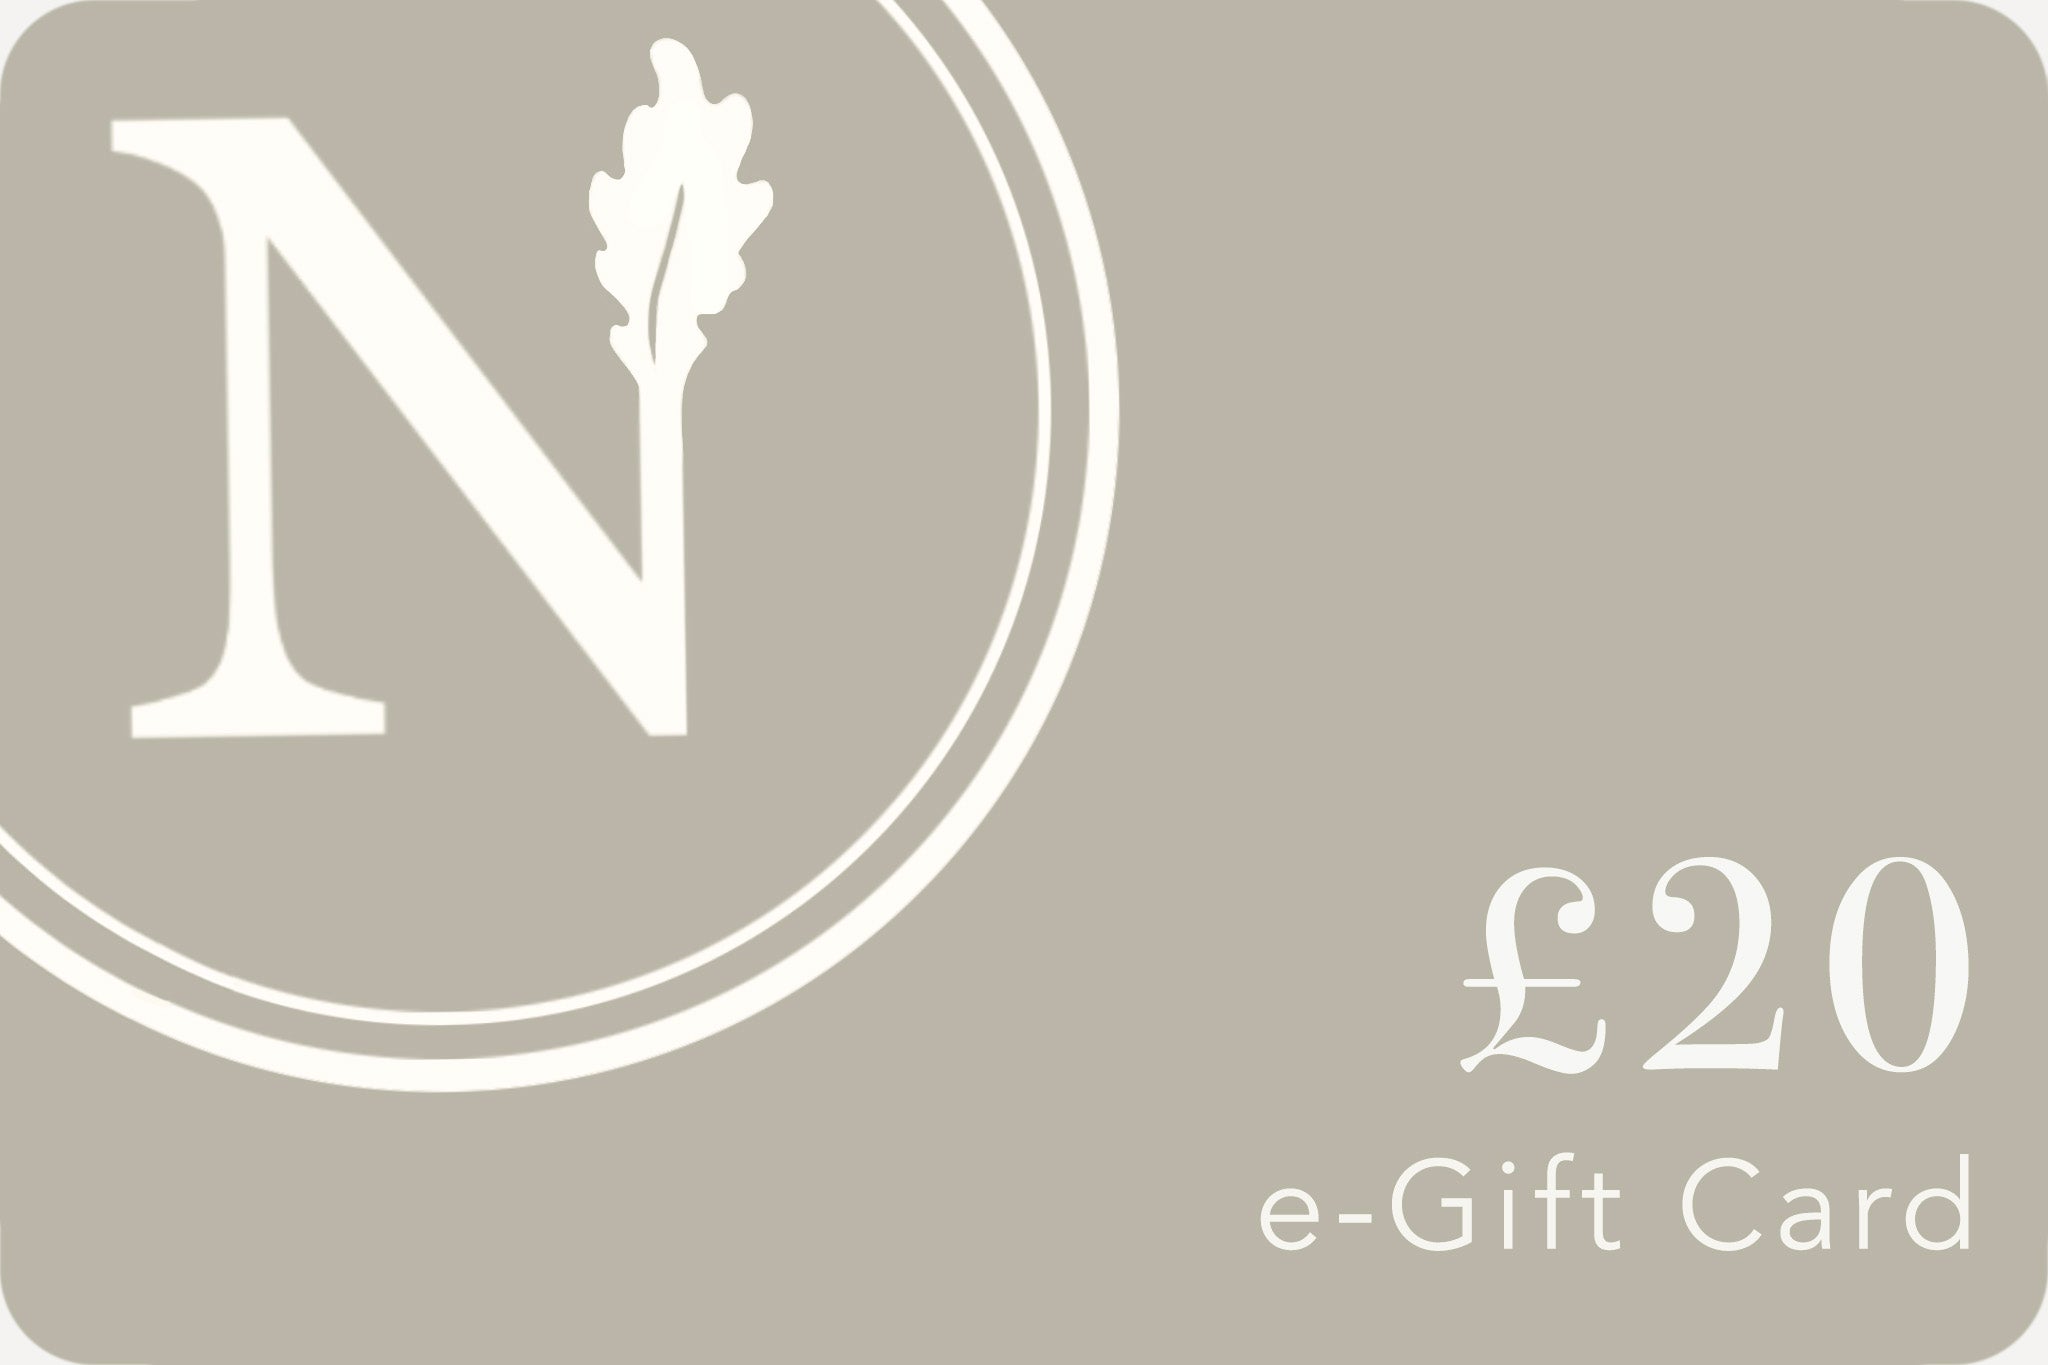 Nestie gift card £20